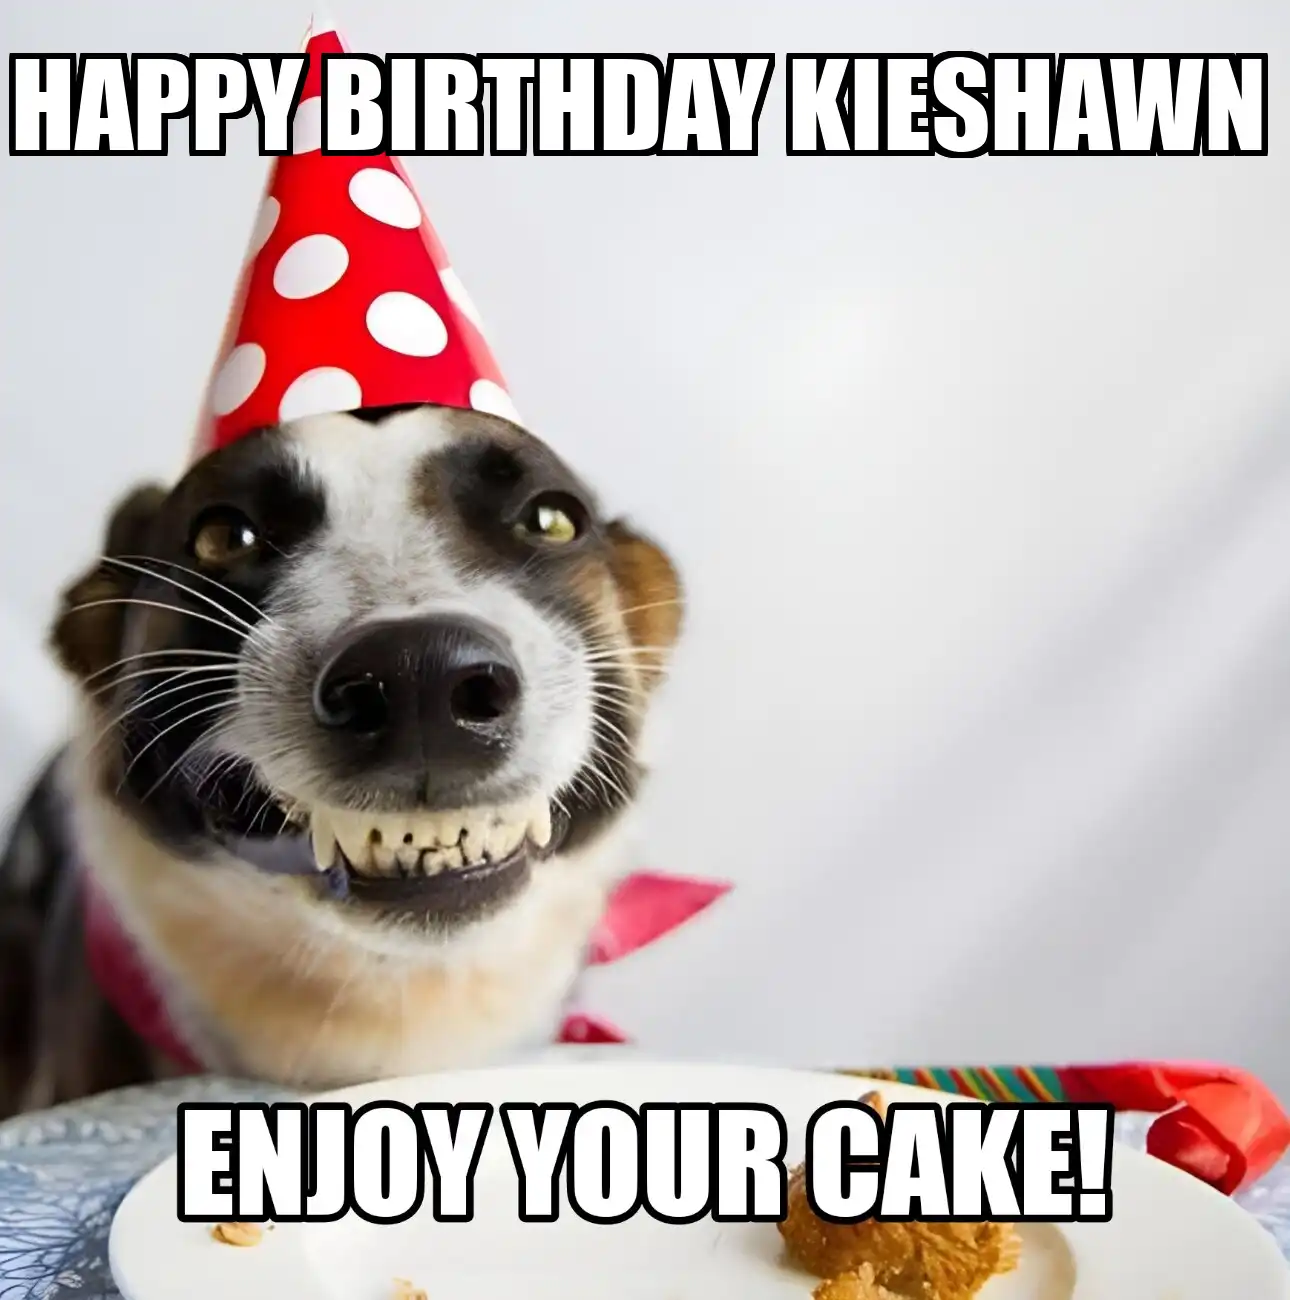 Happy Birthday Kieshawn Enjoy Your Cake Dog Meme